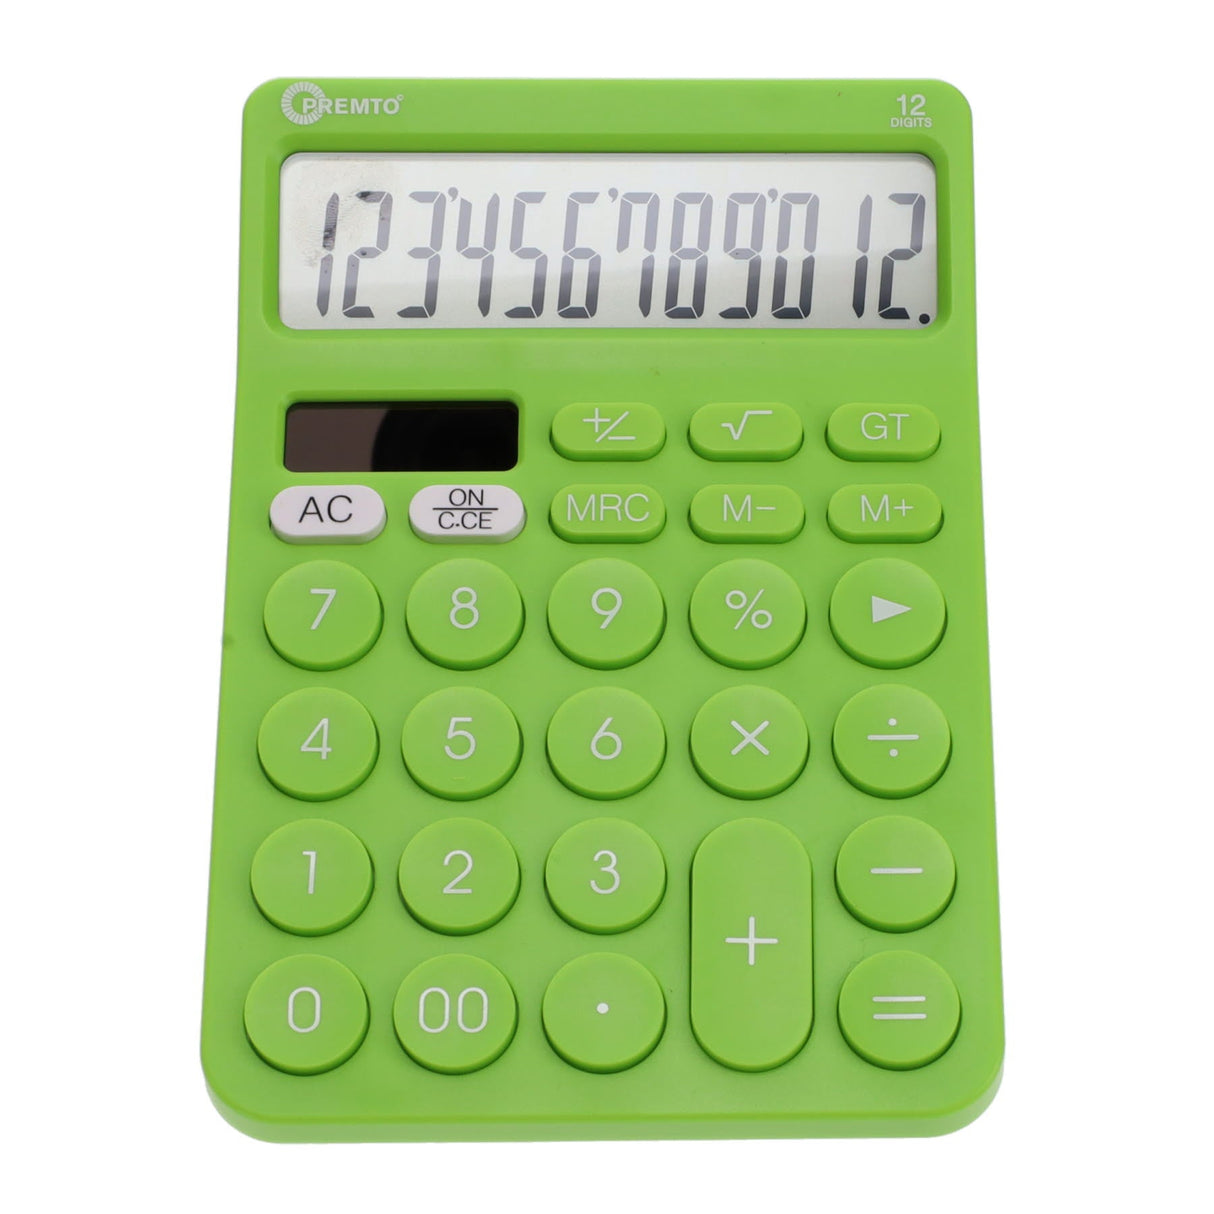 Premto Desktop Calculator Maths Essentials - Caterpillar Green | Stationery Shop UK